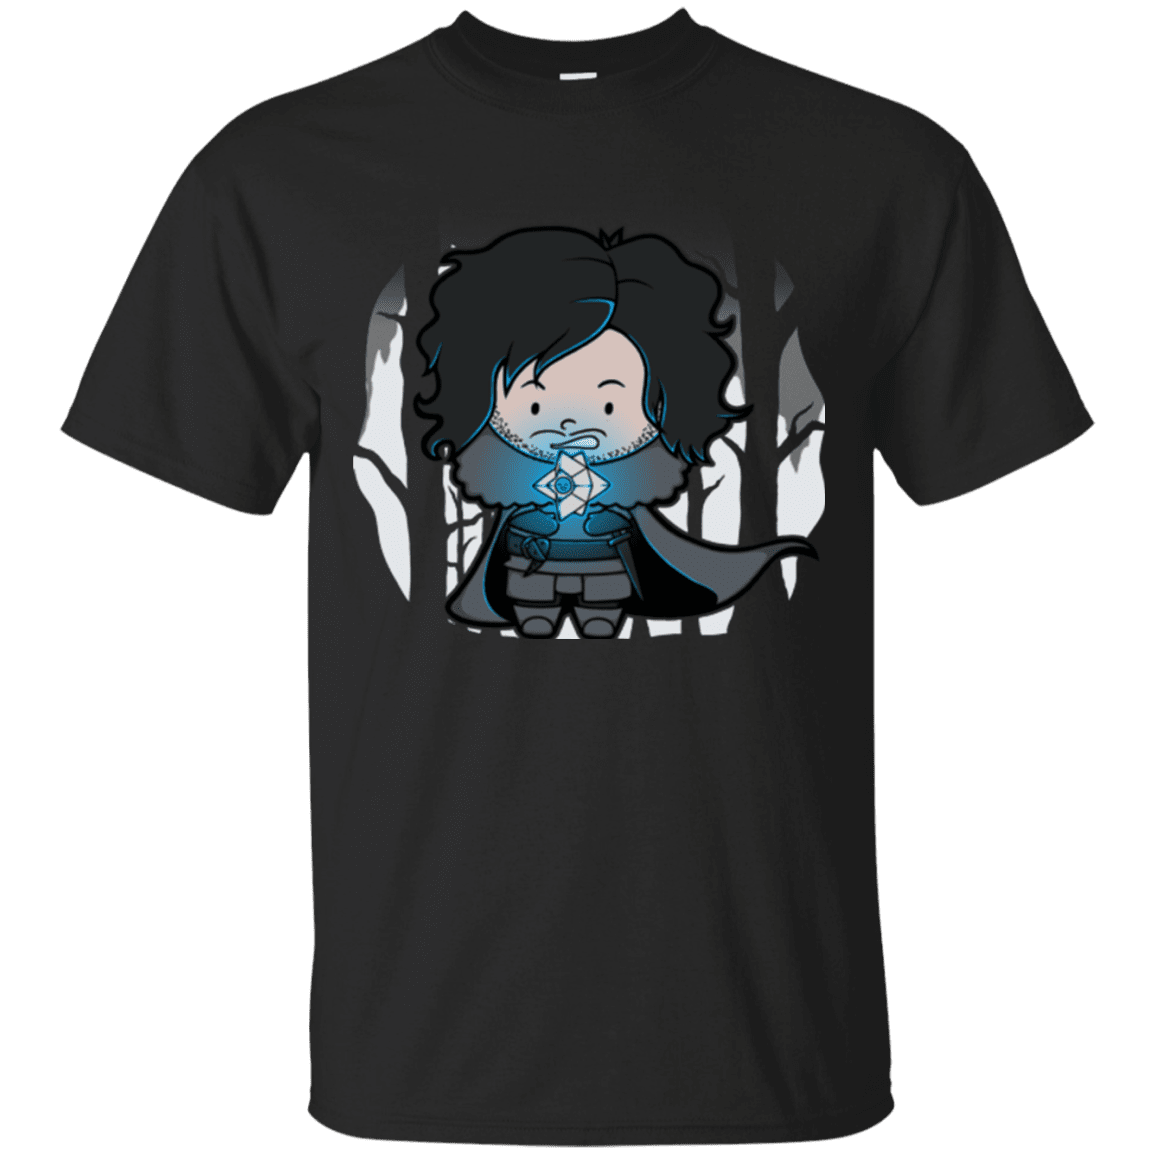 T-Shirts Black / Small Ghost T-Shirt